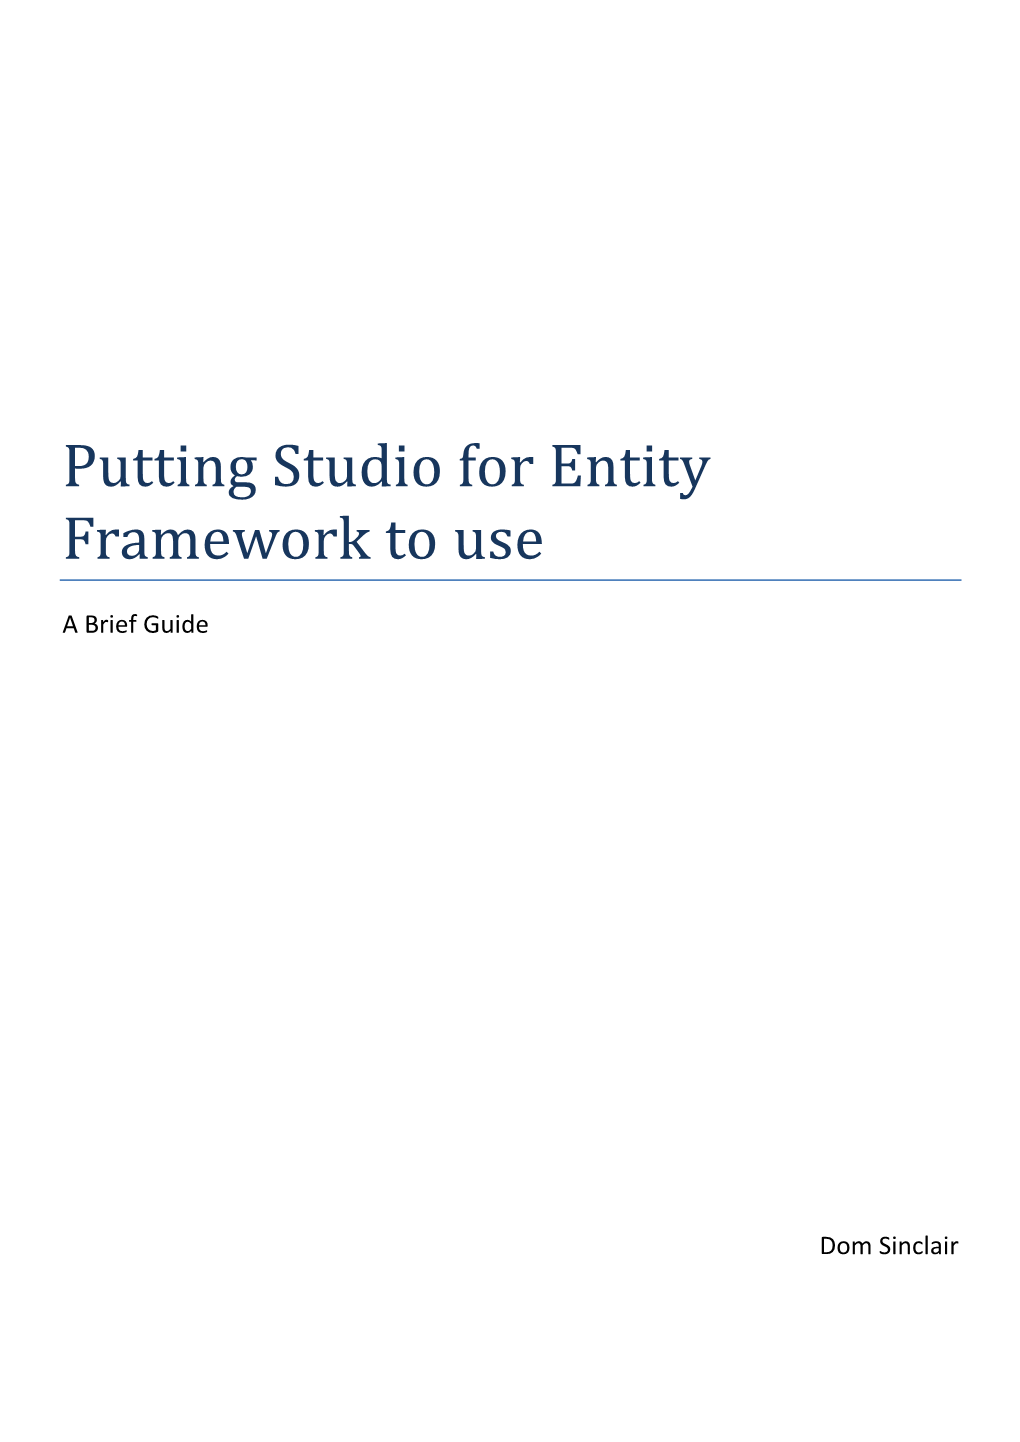 Putting Studio for Entity Framework to Use